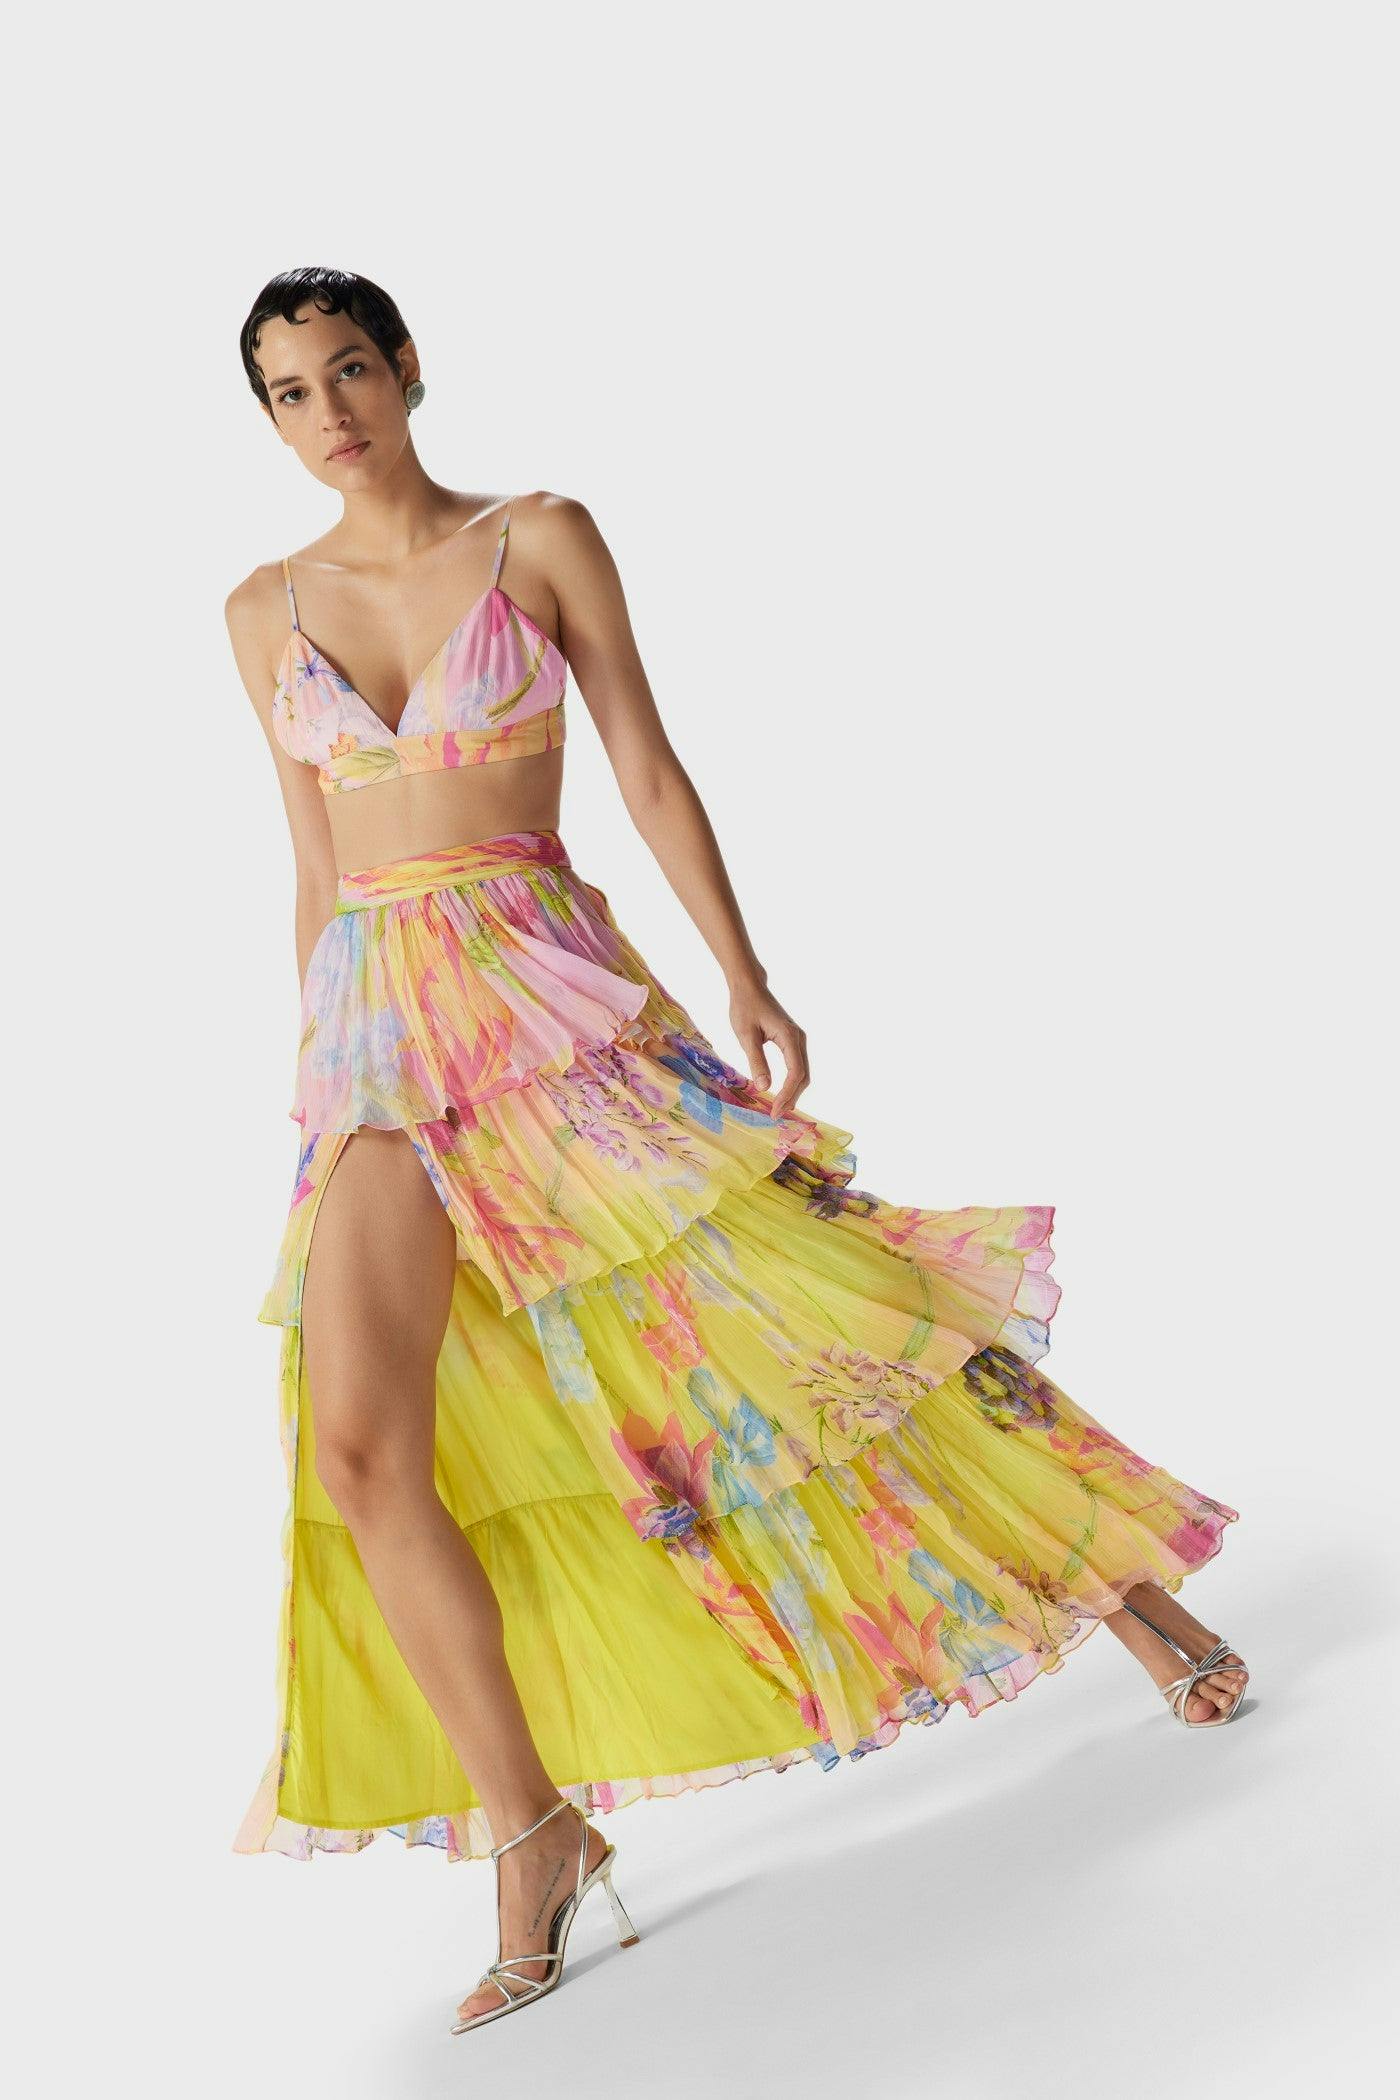 Tira Flirty Skirt, a product by THE IASO